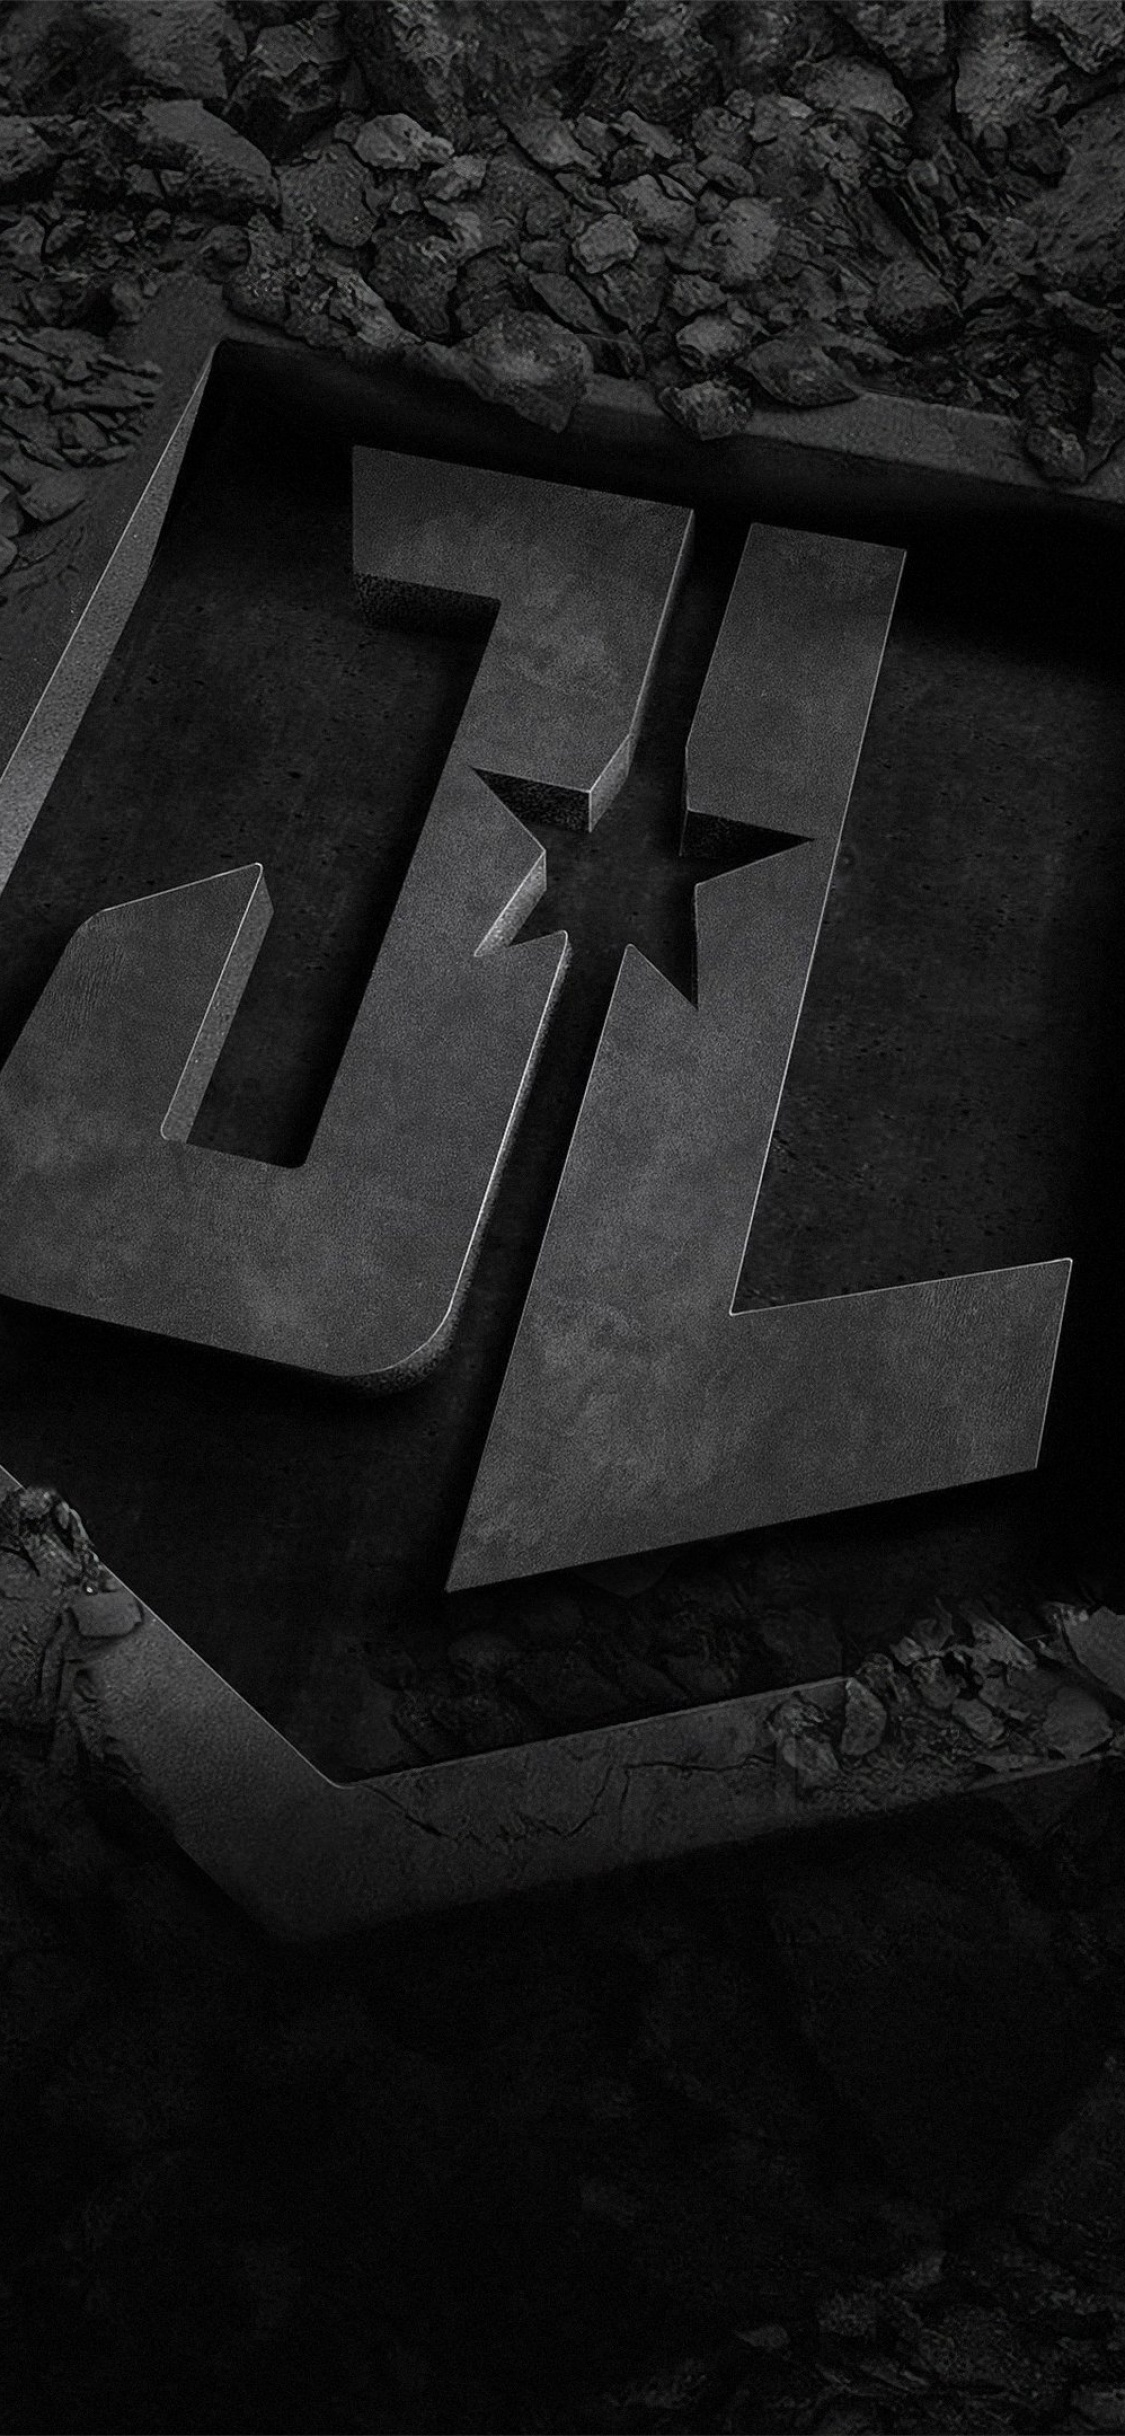 justice-league-dc-comics-logo-dark-background-1125x2436-8355.jpg